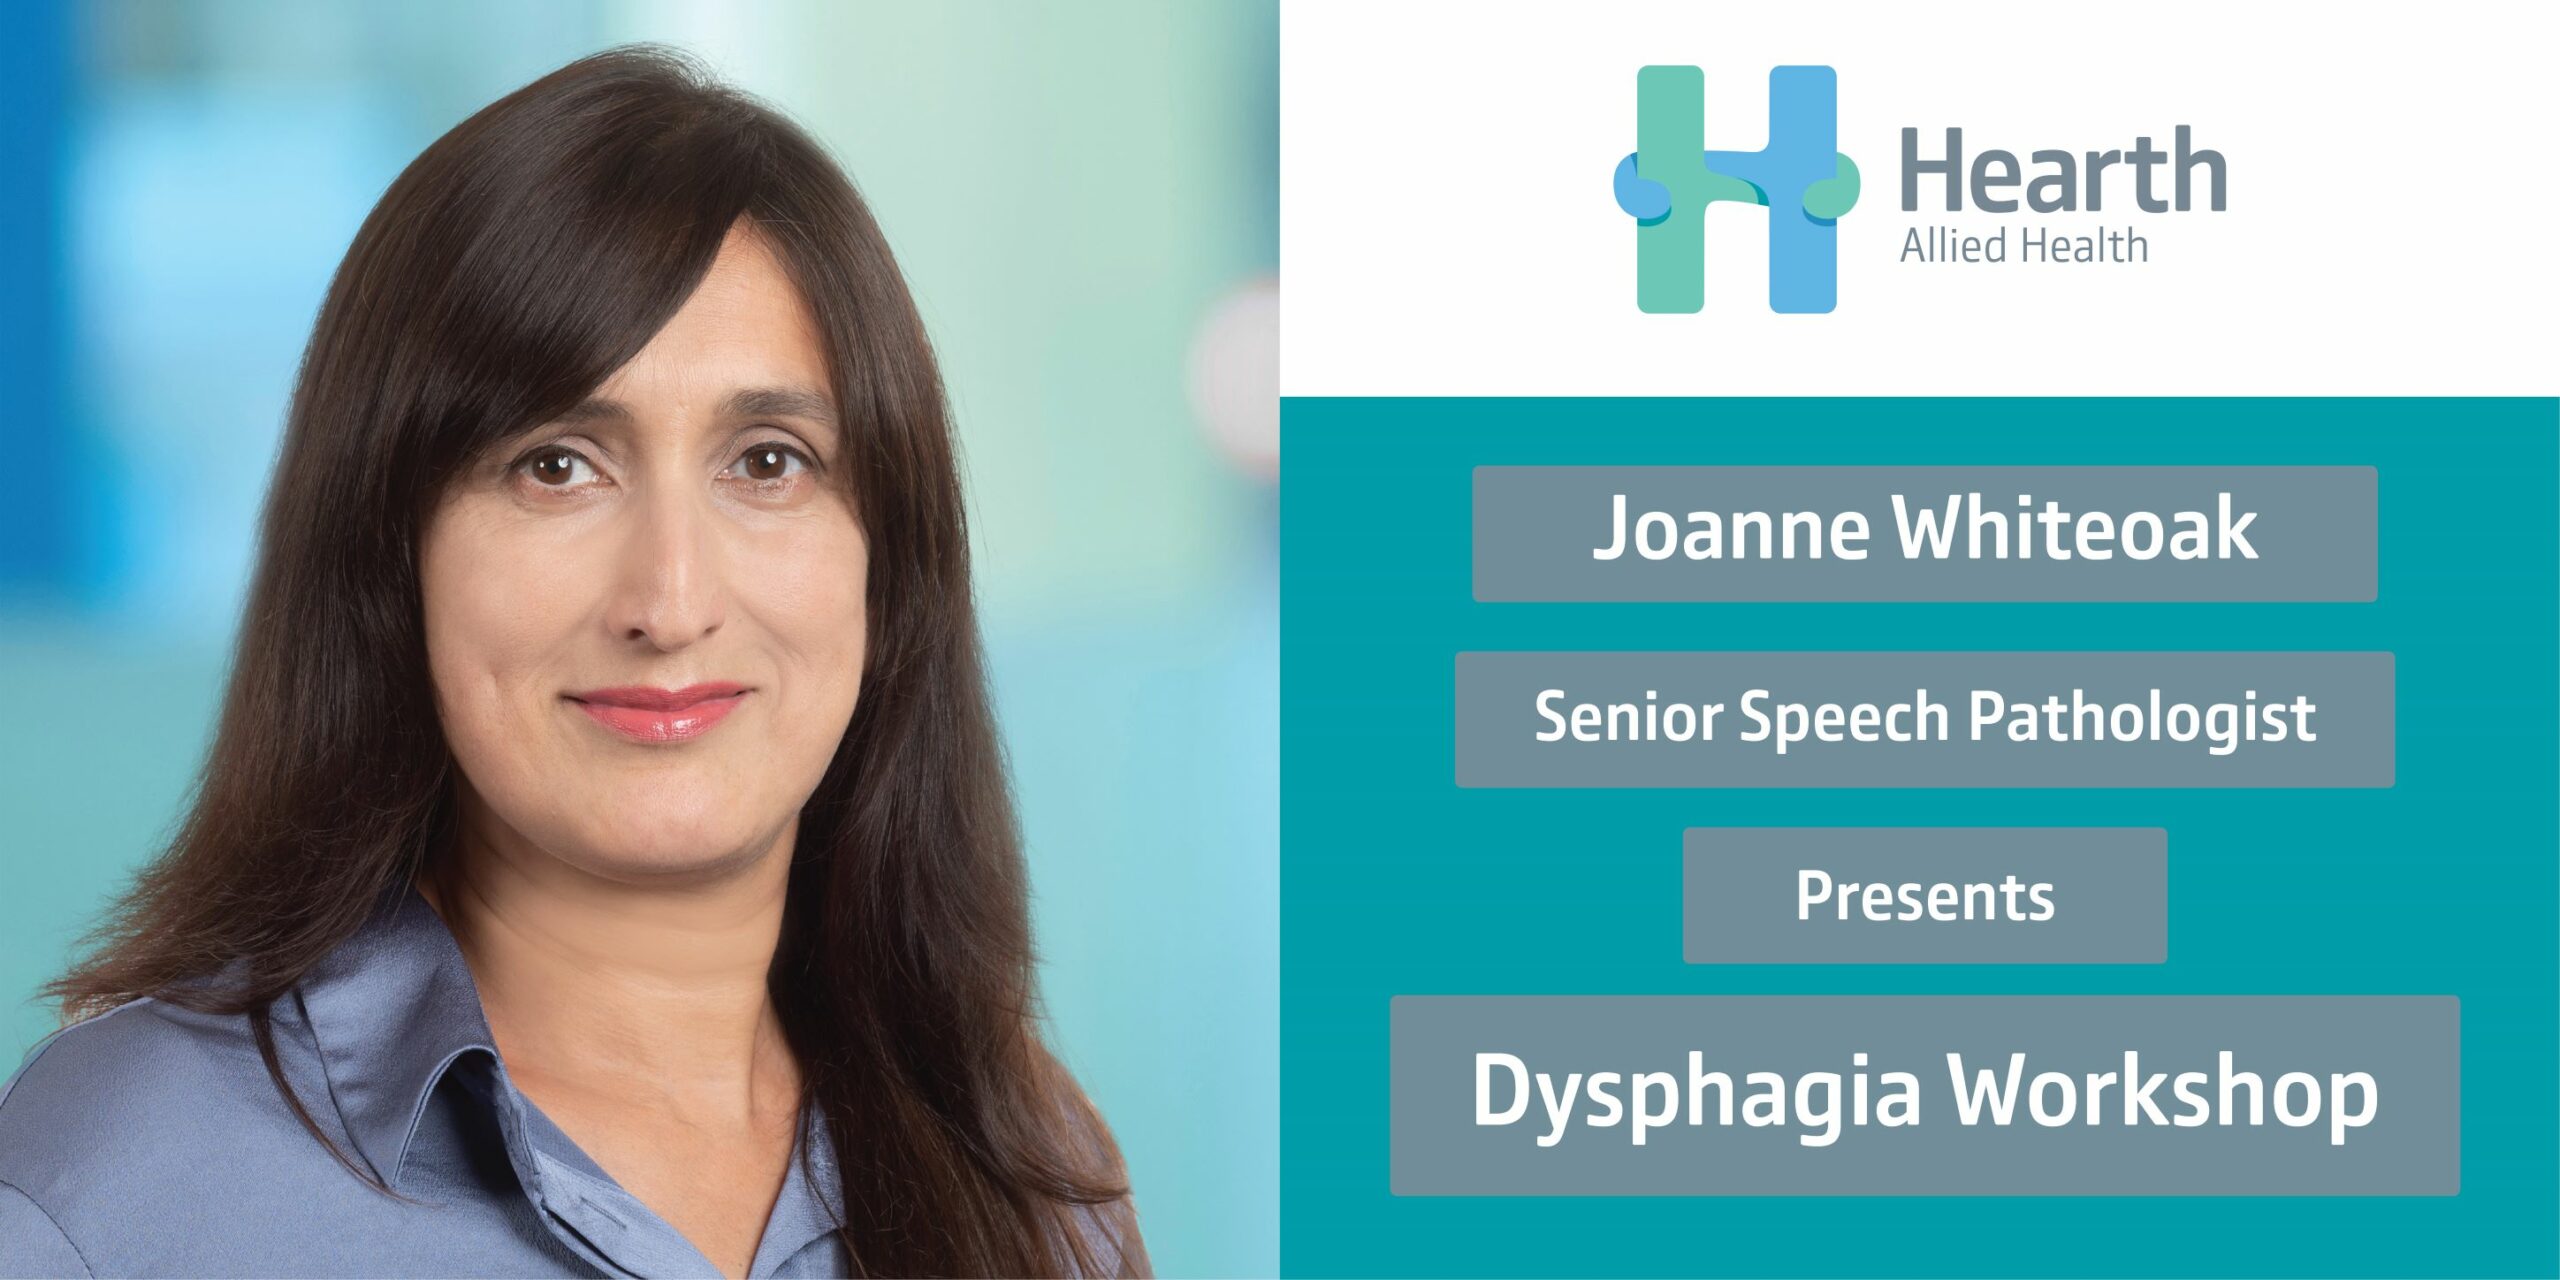 Hearth Allied Health’s Senior Speech Pathologist Joanne Whiteoak presents Dysphagia Workshop